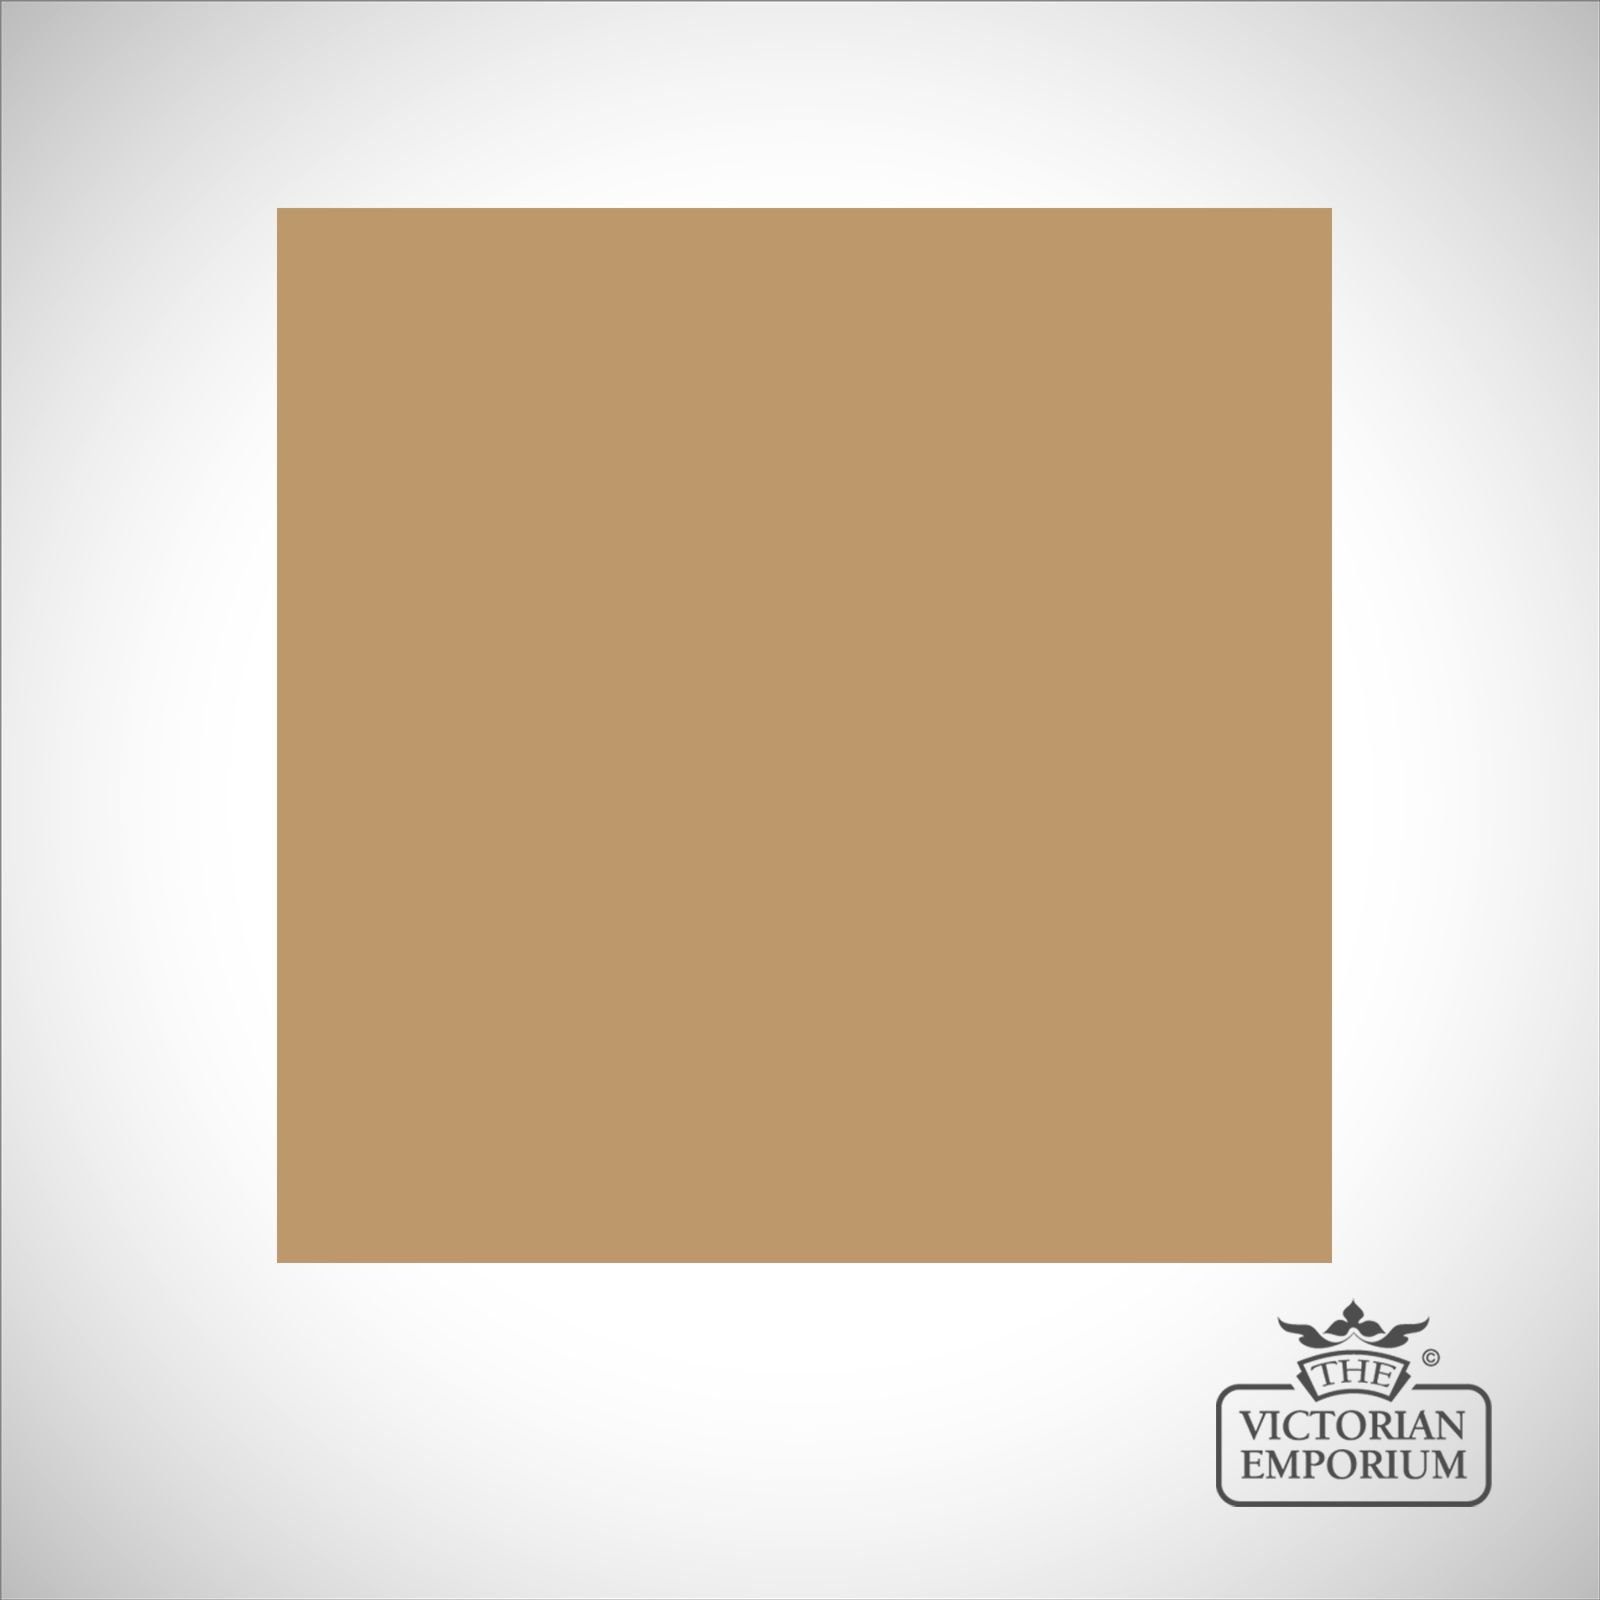 Basic yellow/cognac floor tile - interior or exterior use